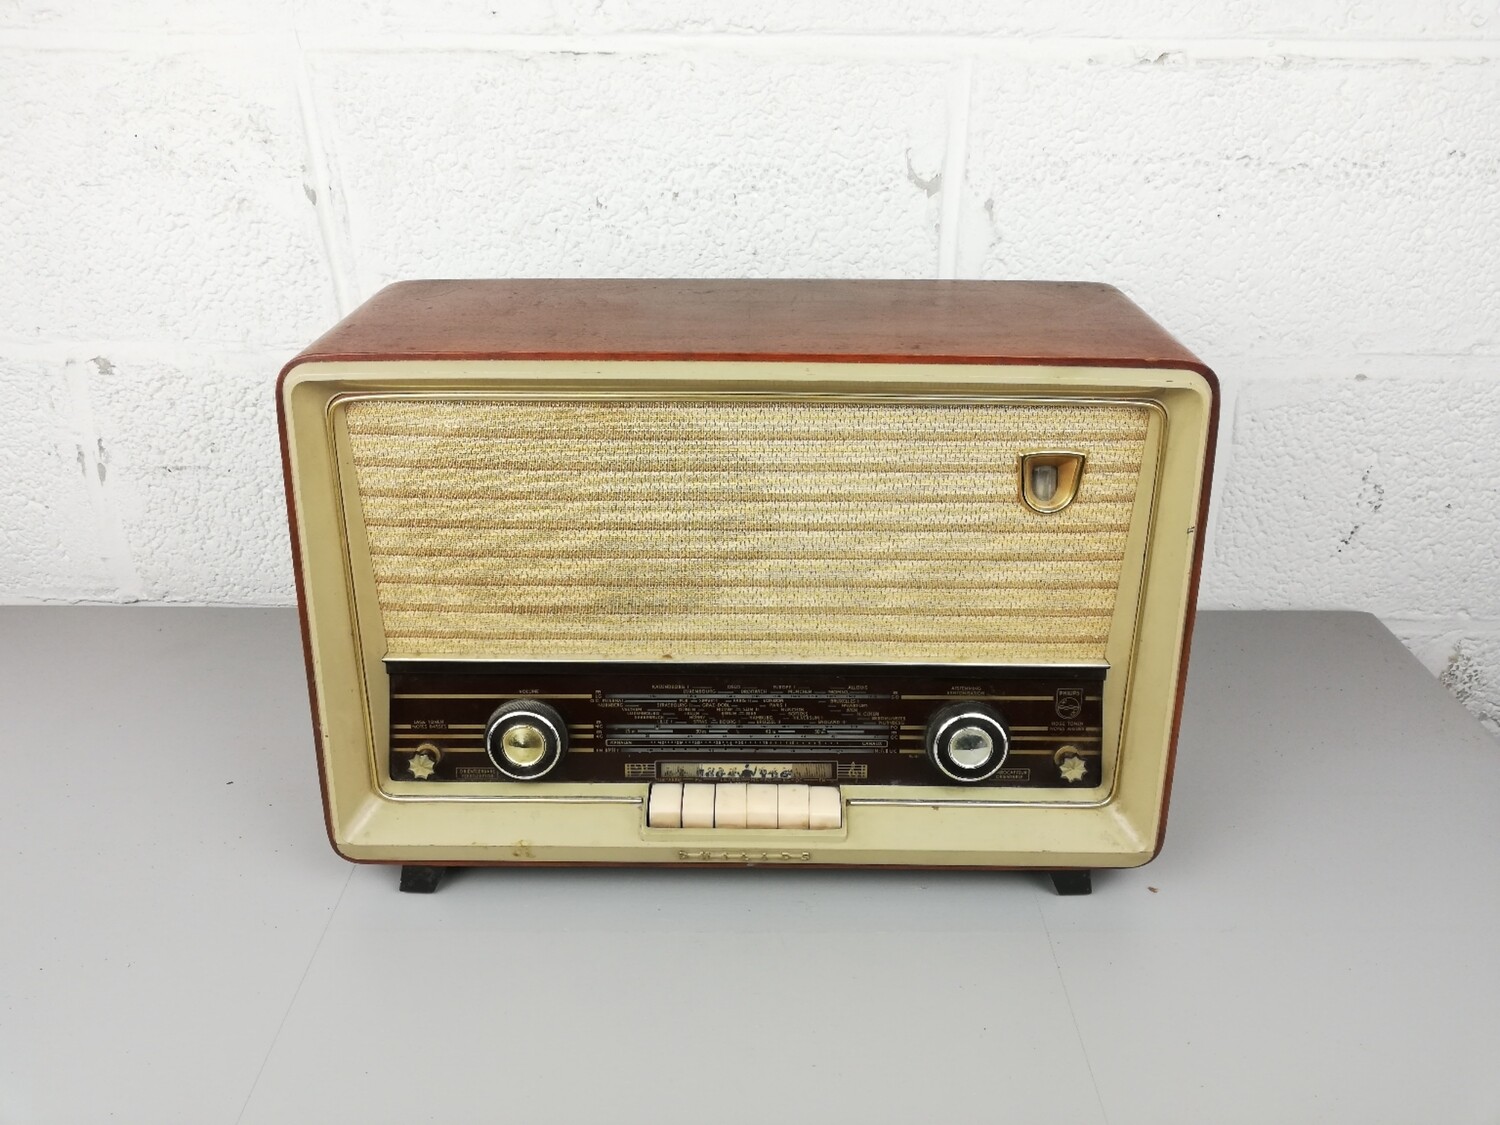 Philips B5X72A radio